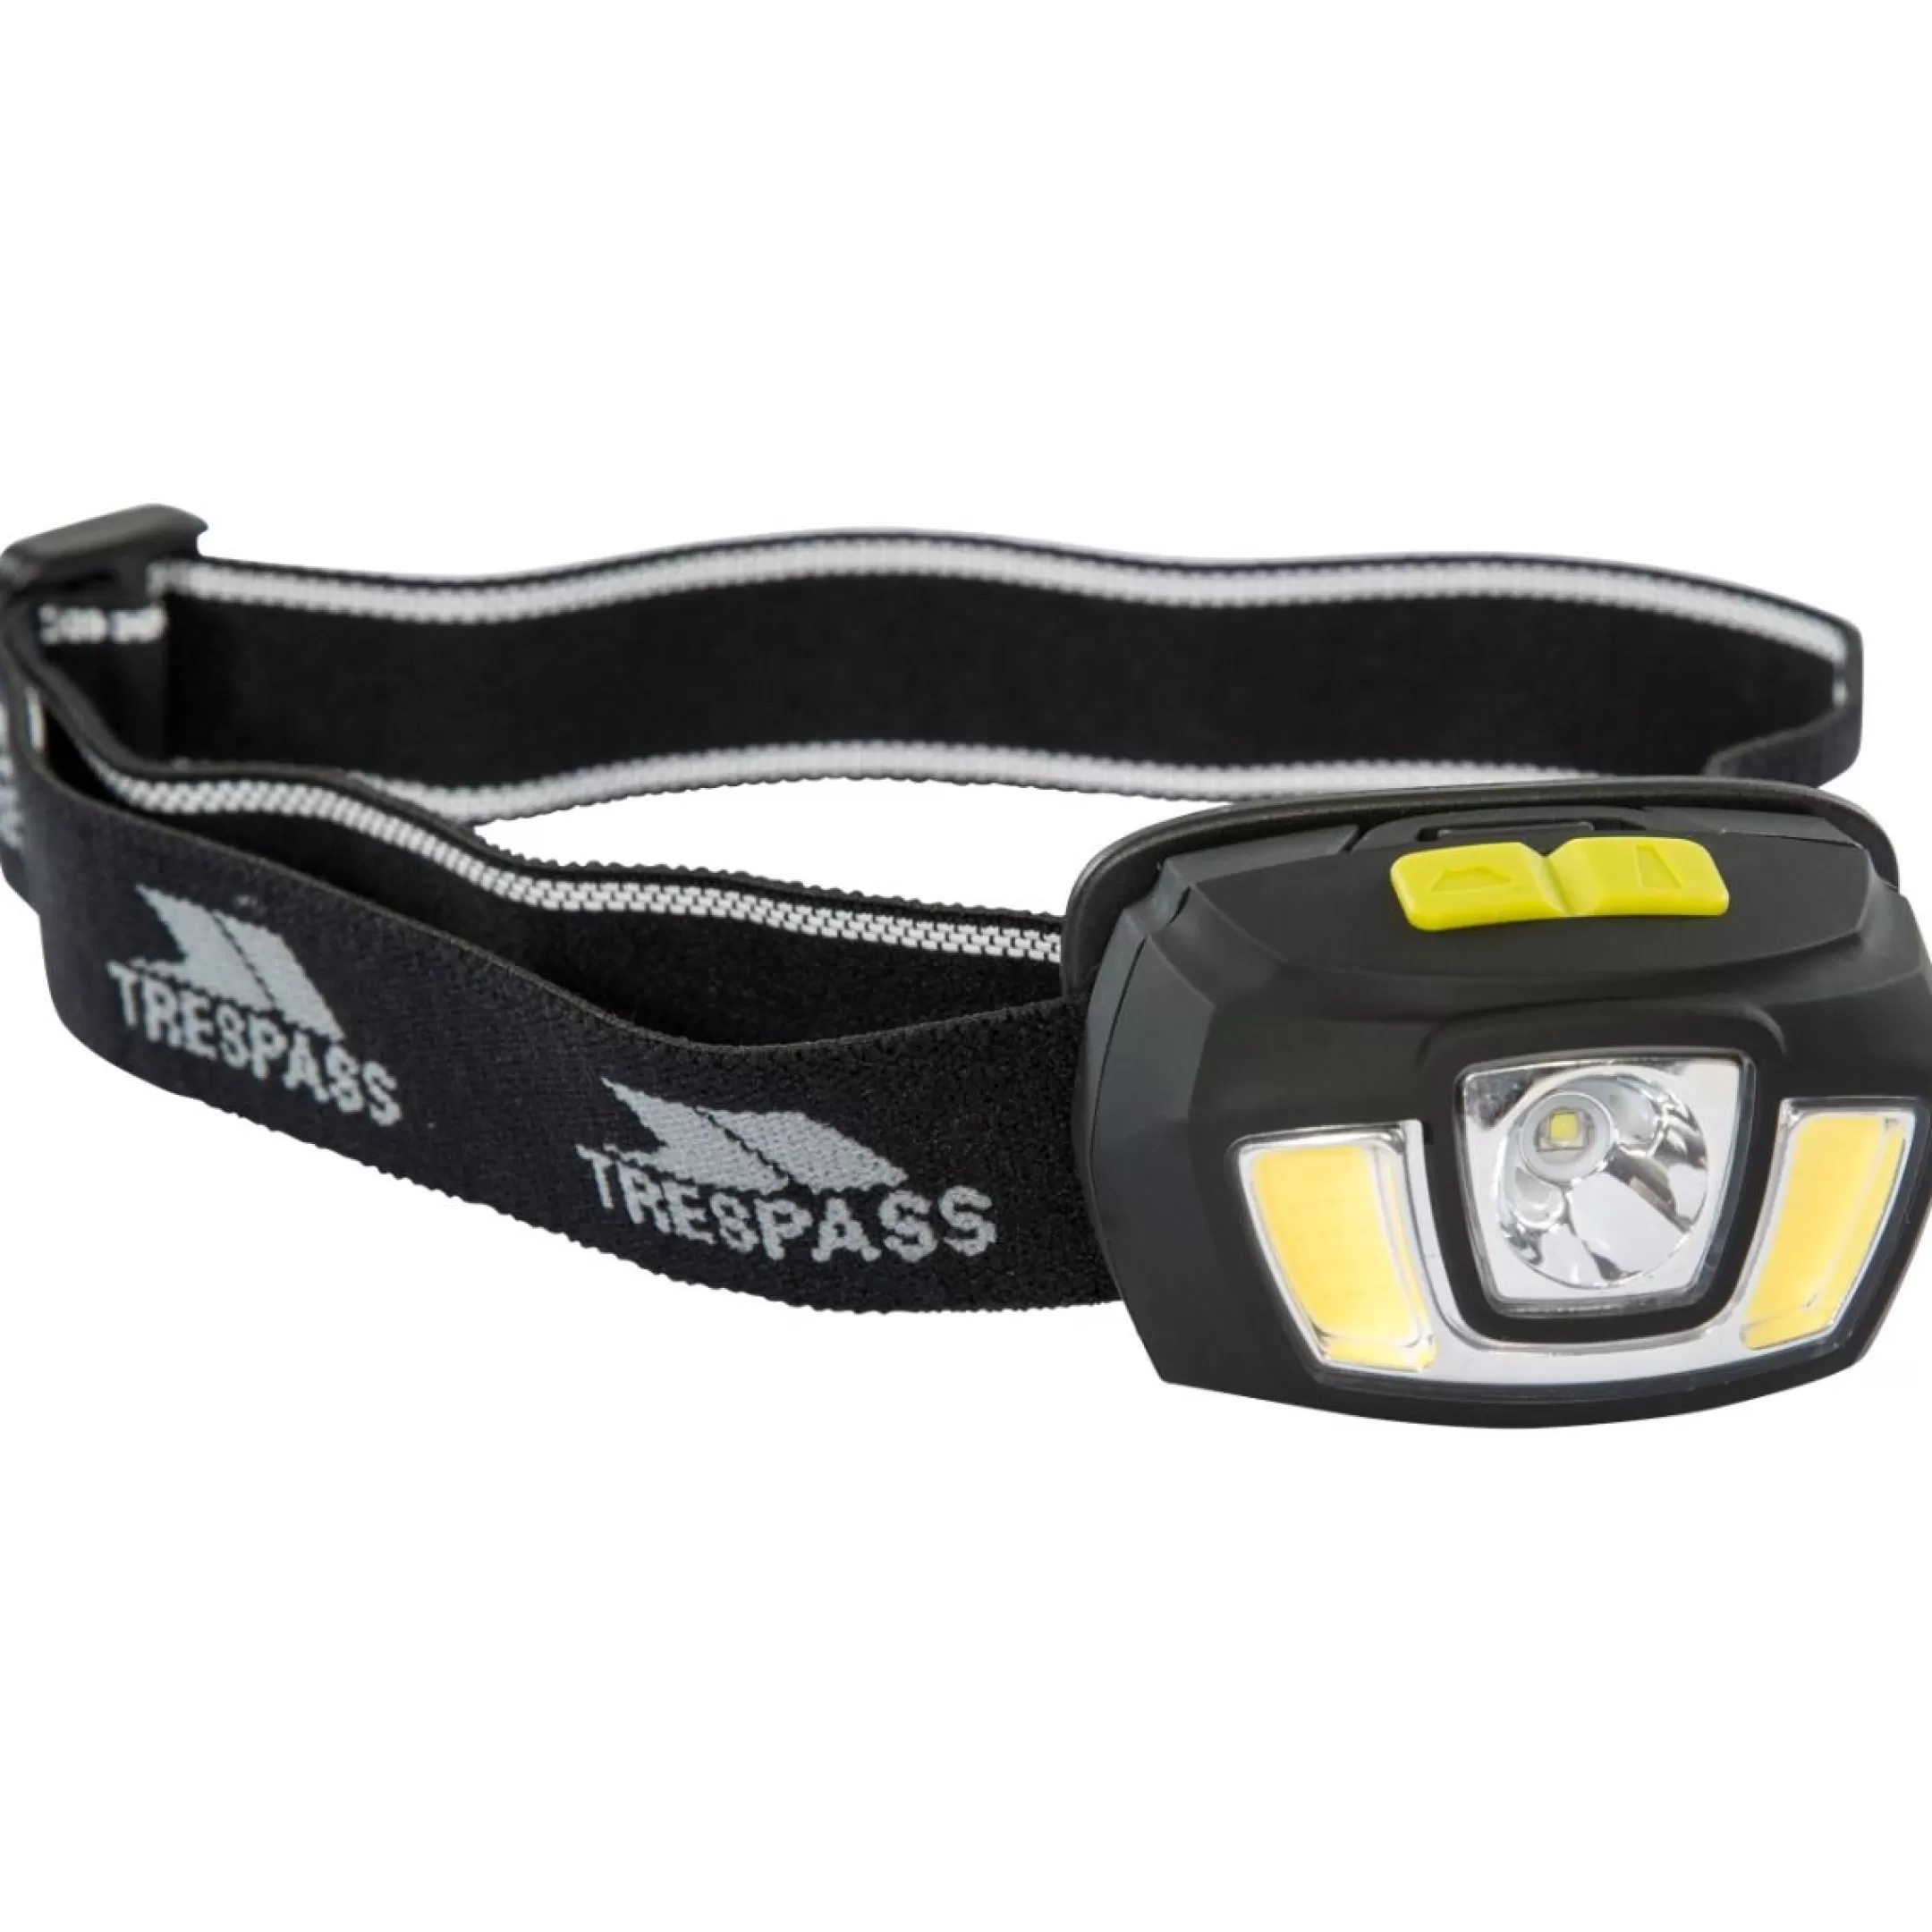 Head Torch 250lm LED | Trespass Fashion